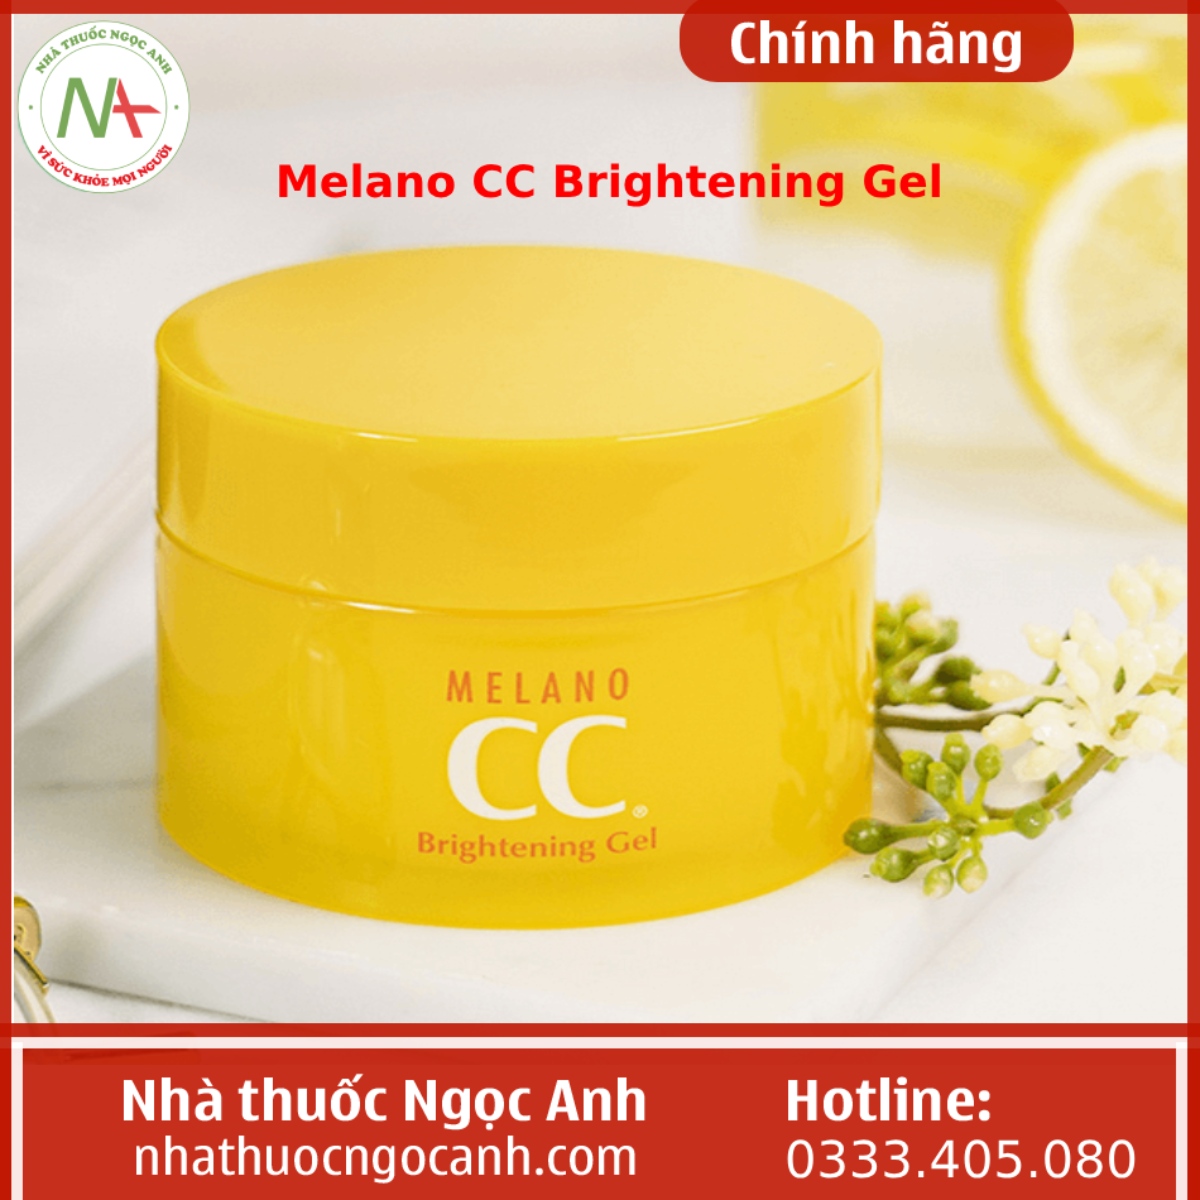 Melano CC Brightening Gel